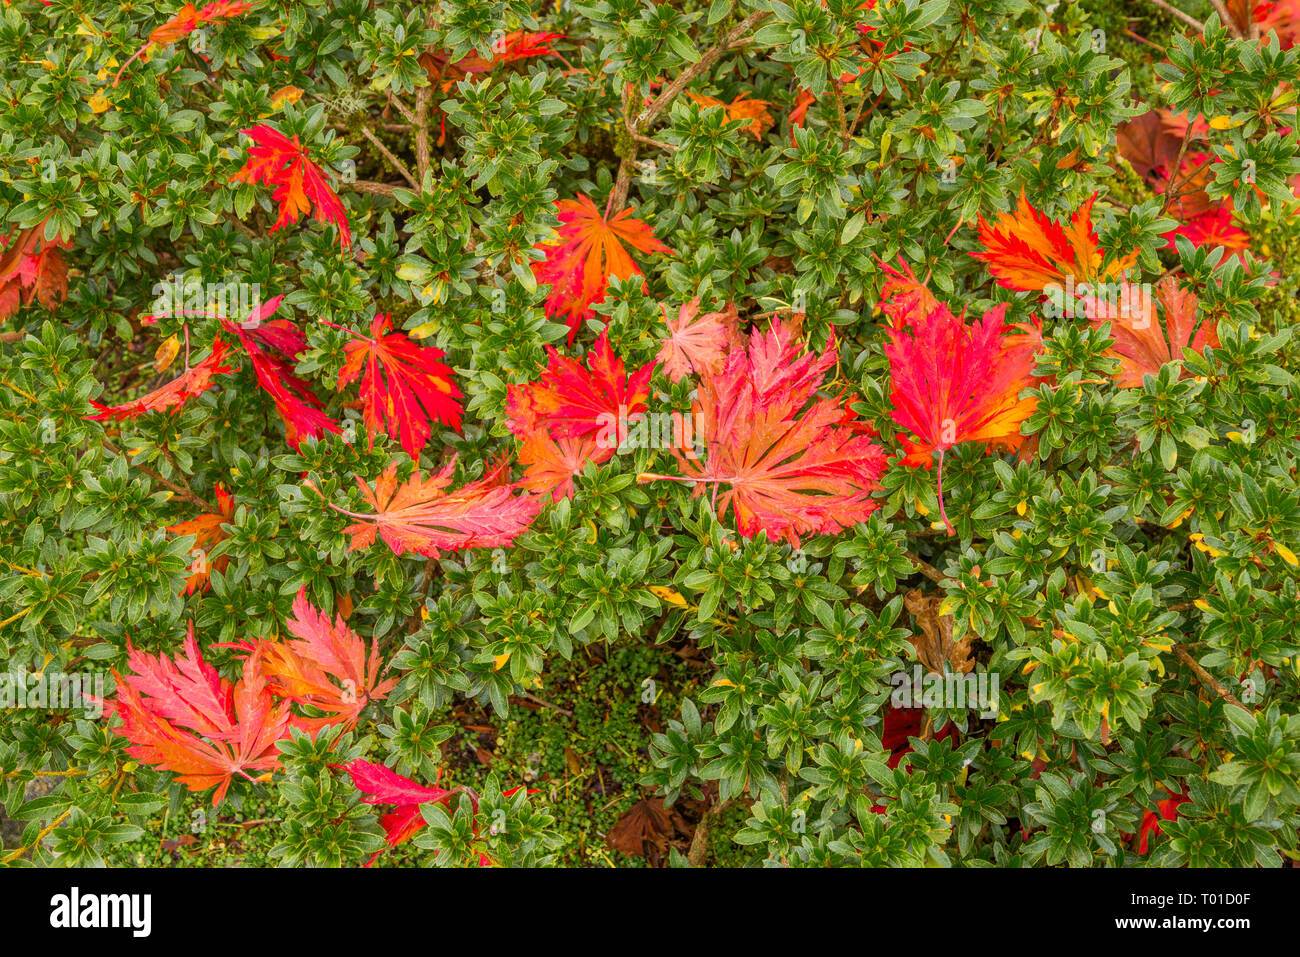 Japanese maple leaves on shrub Stock Photo